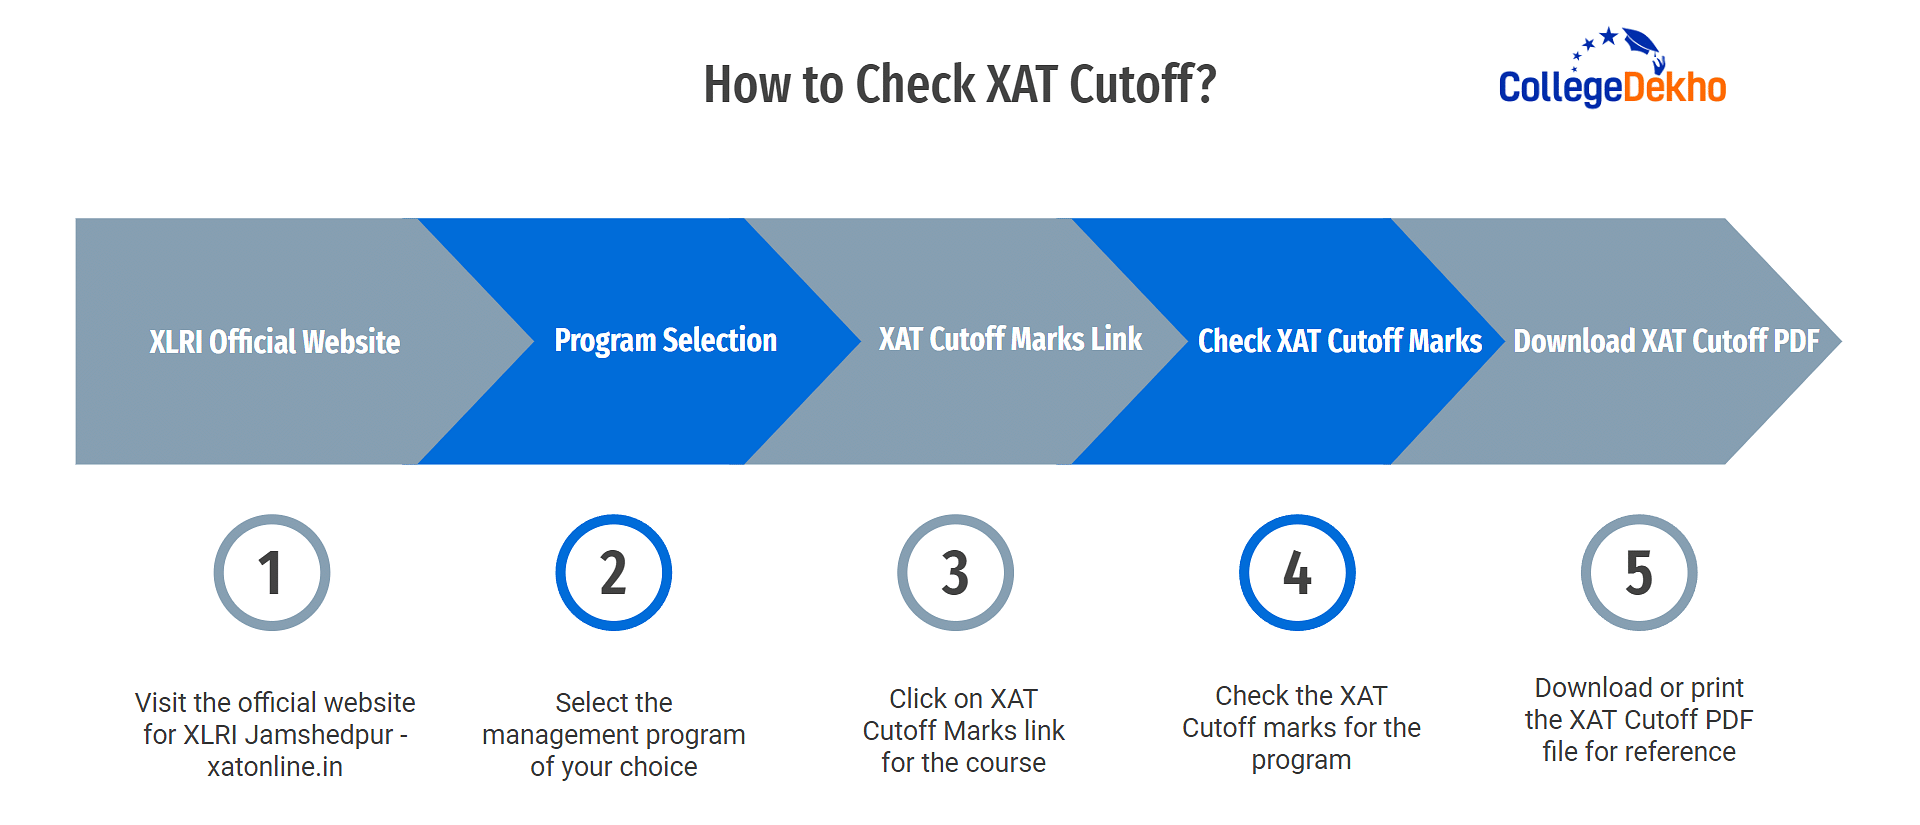 How to Check XAT Cutoff